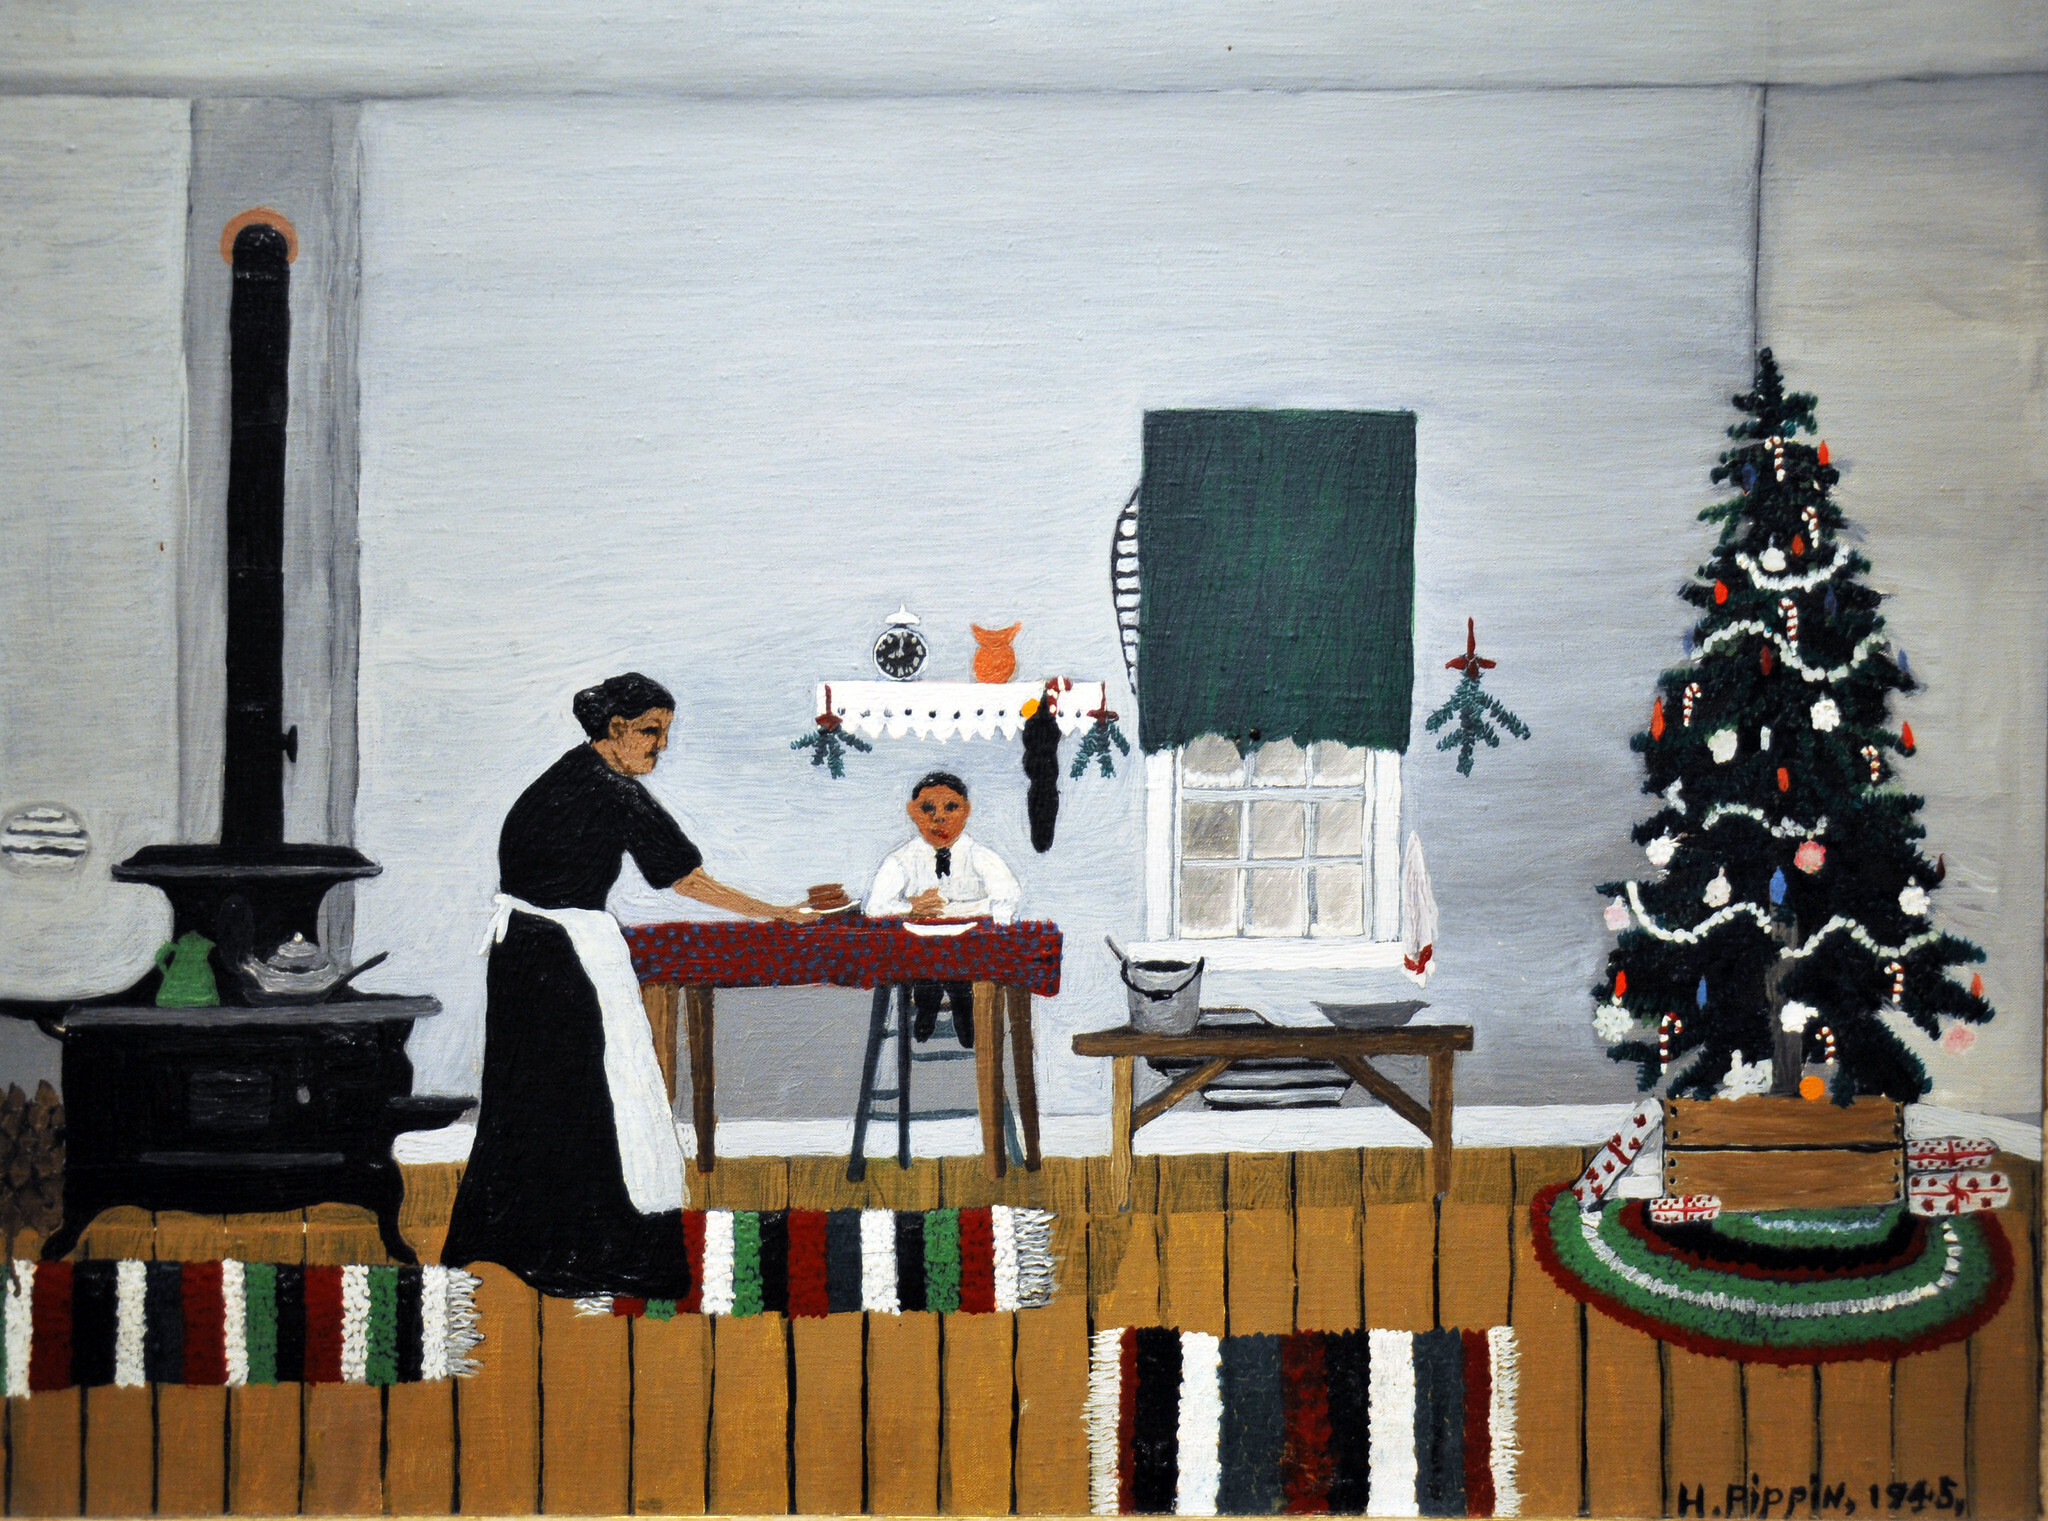 Karácsony napja, reggeli by Horace Pippin - 1945 - 53,6 x 66,5 cm 